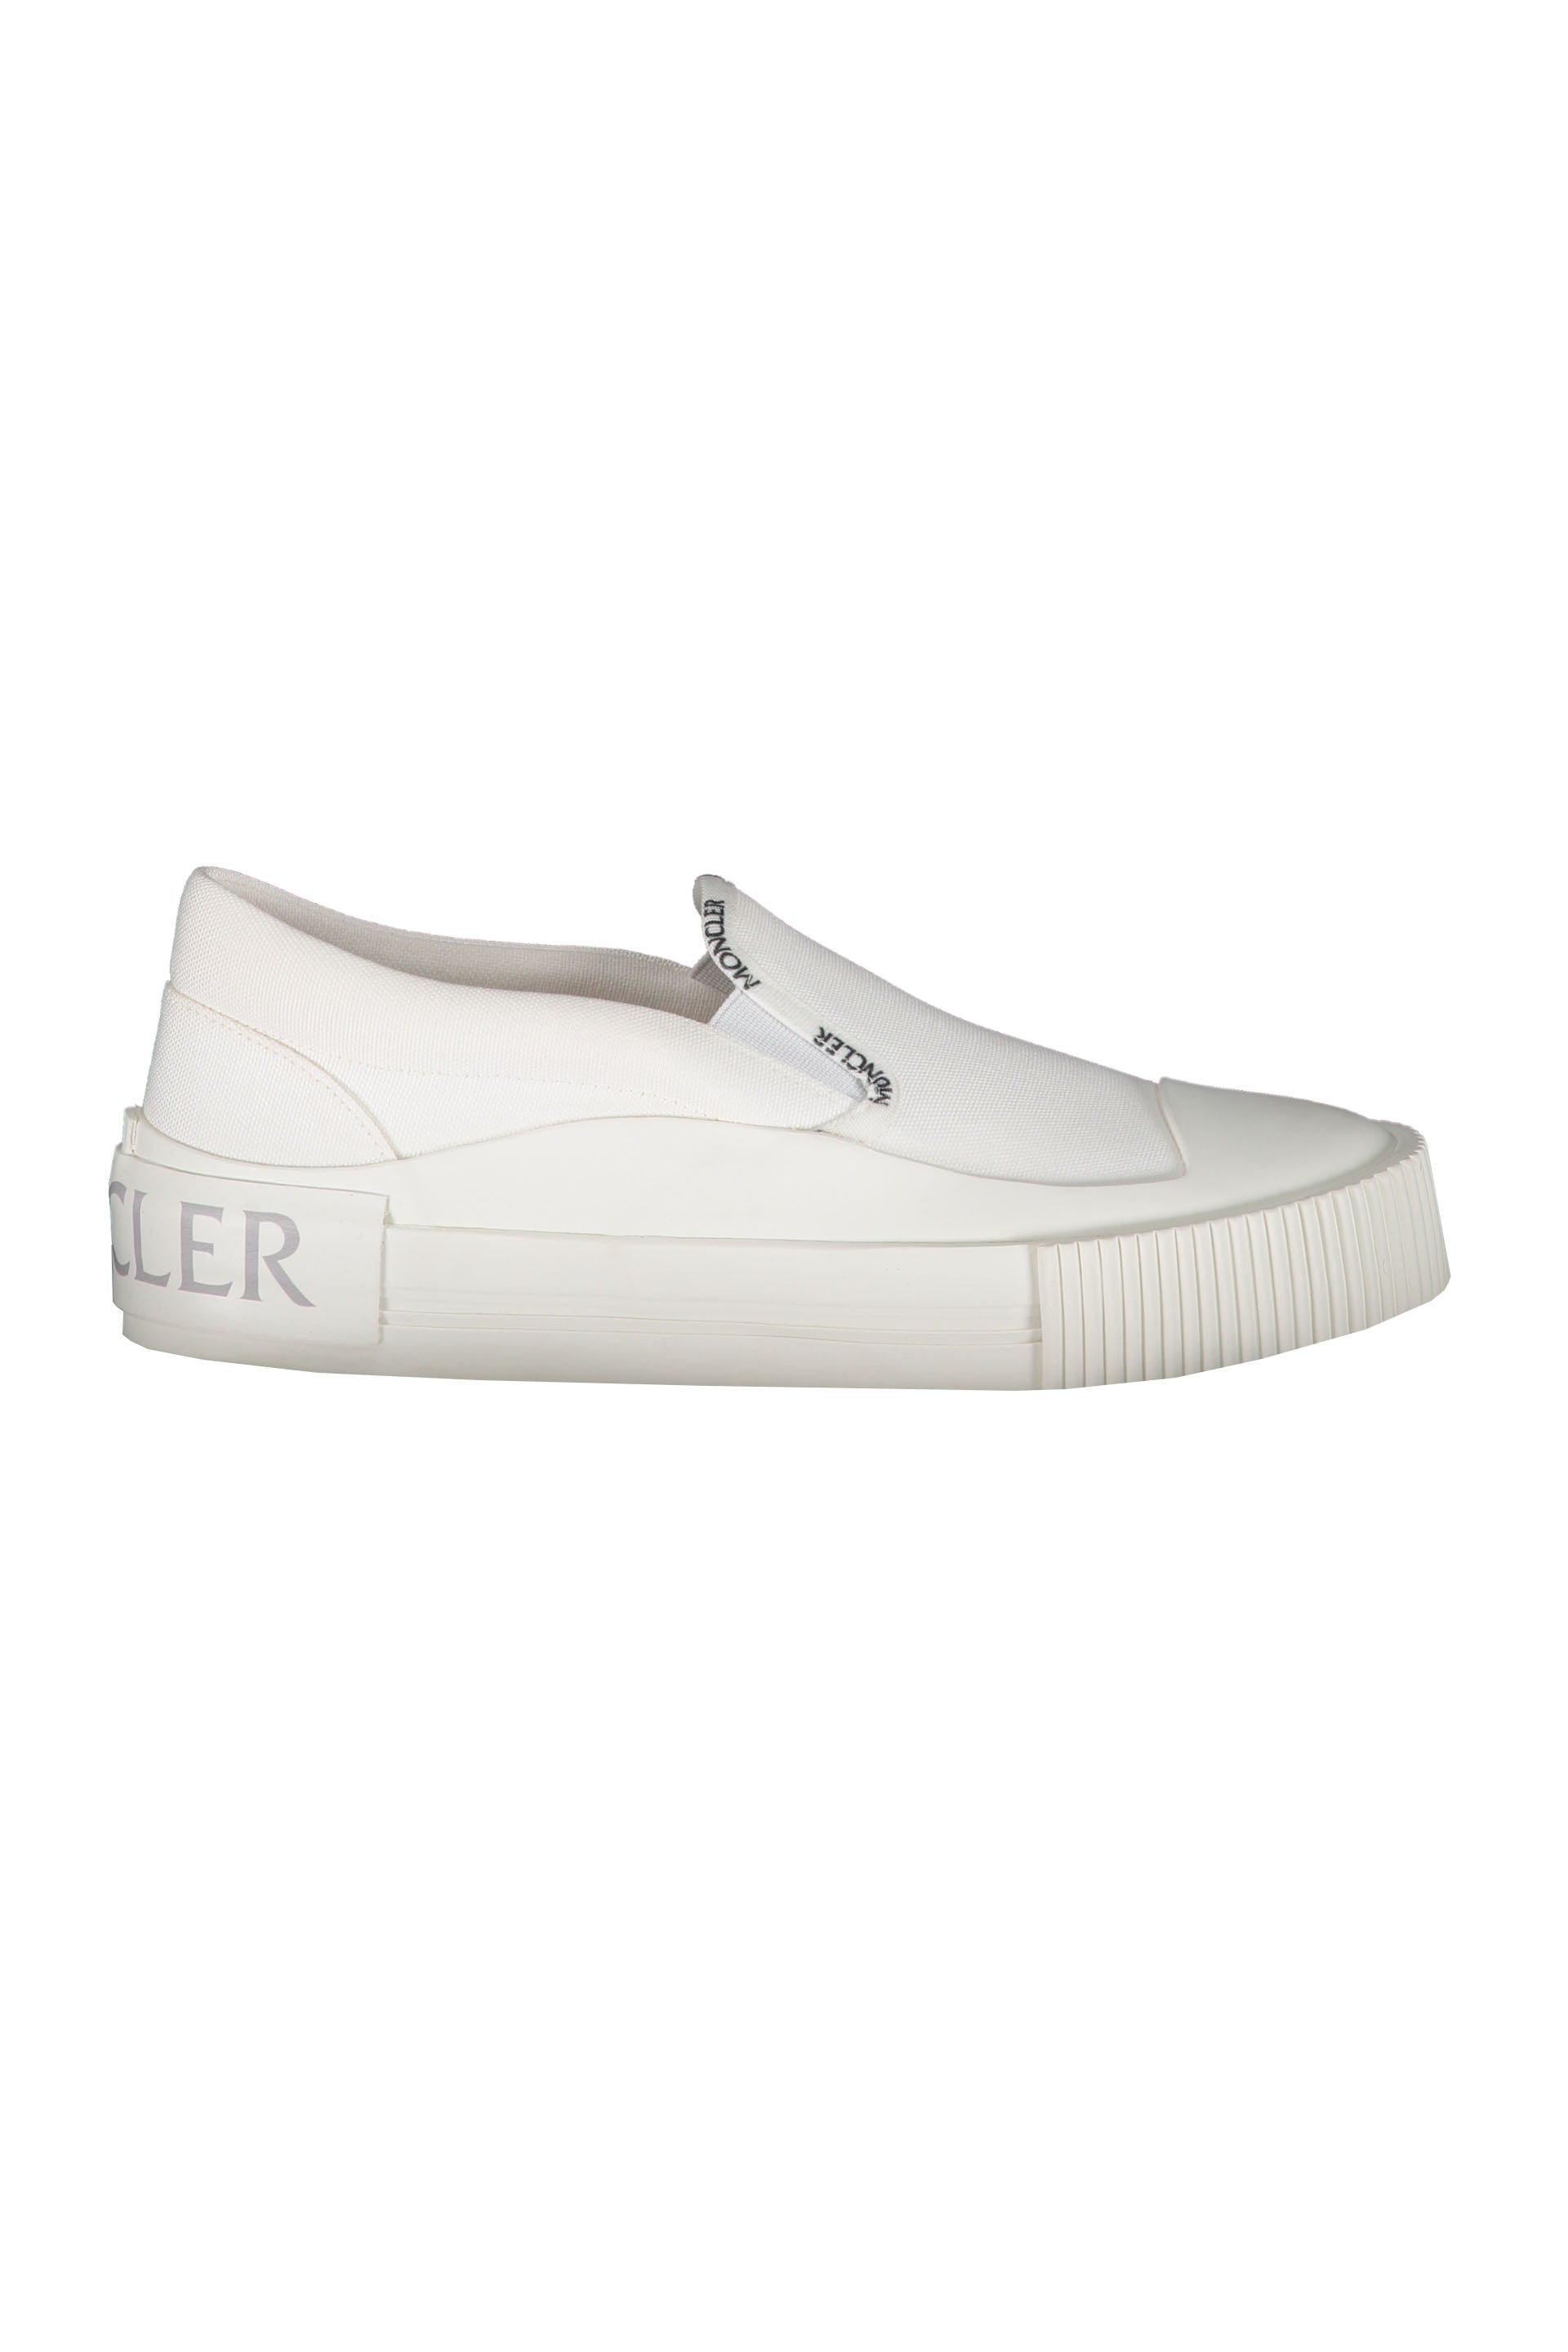 Glissiere Tri slip-on sneakers-Moncler-OUTLET-SALE-35-ARCHIVIST